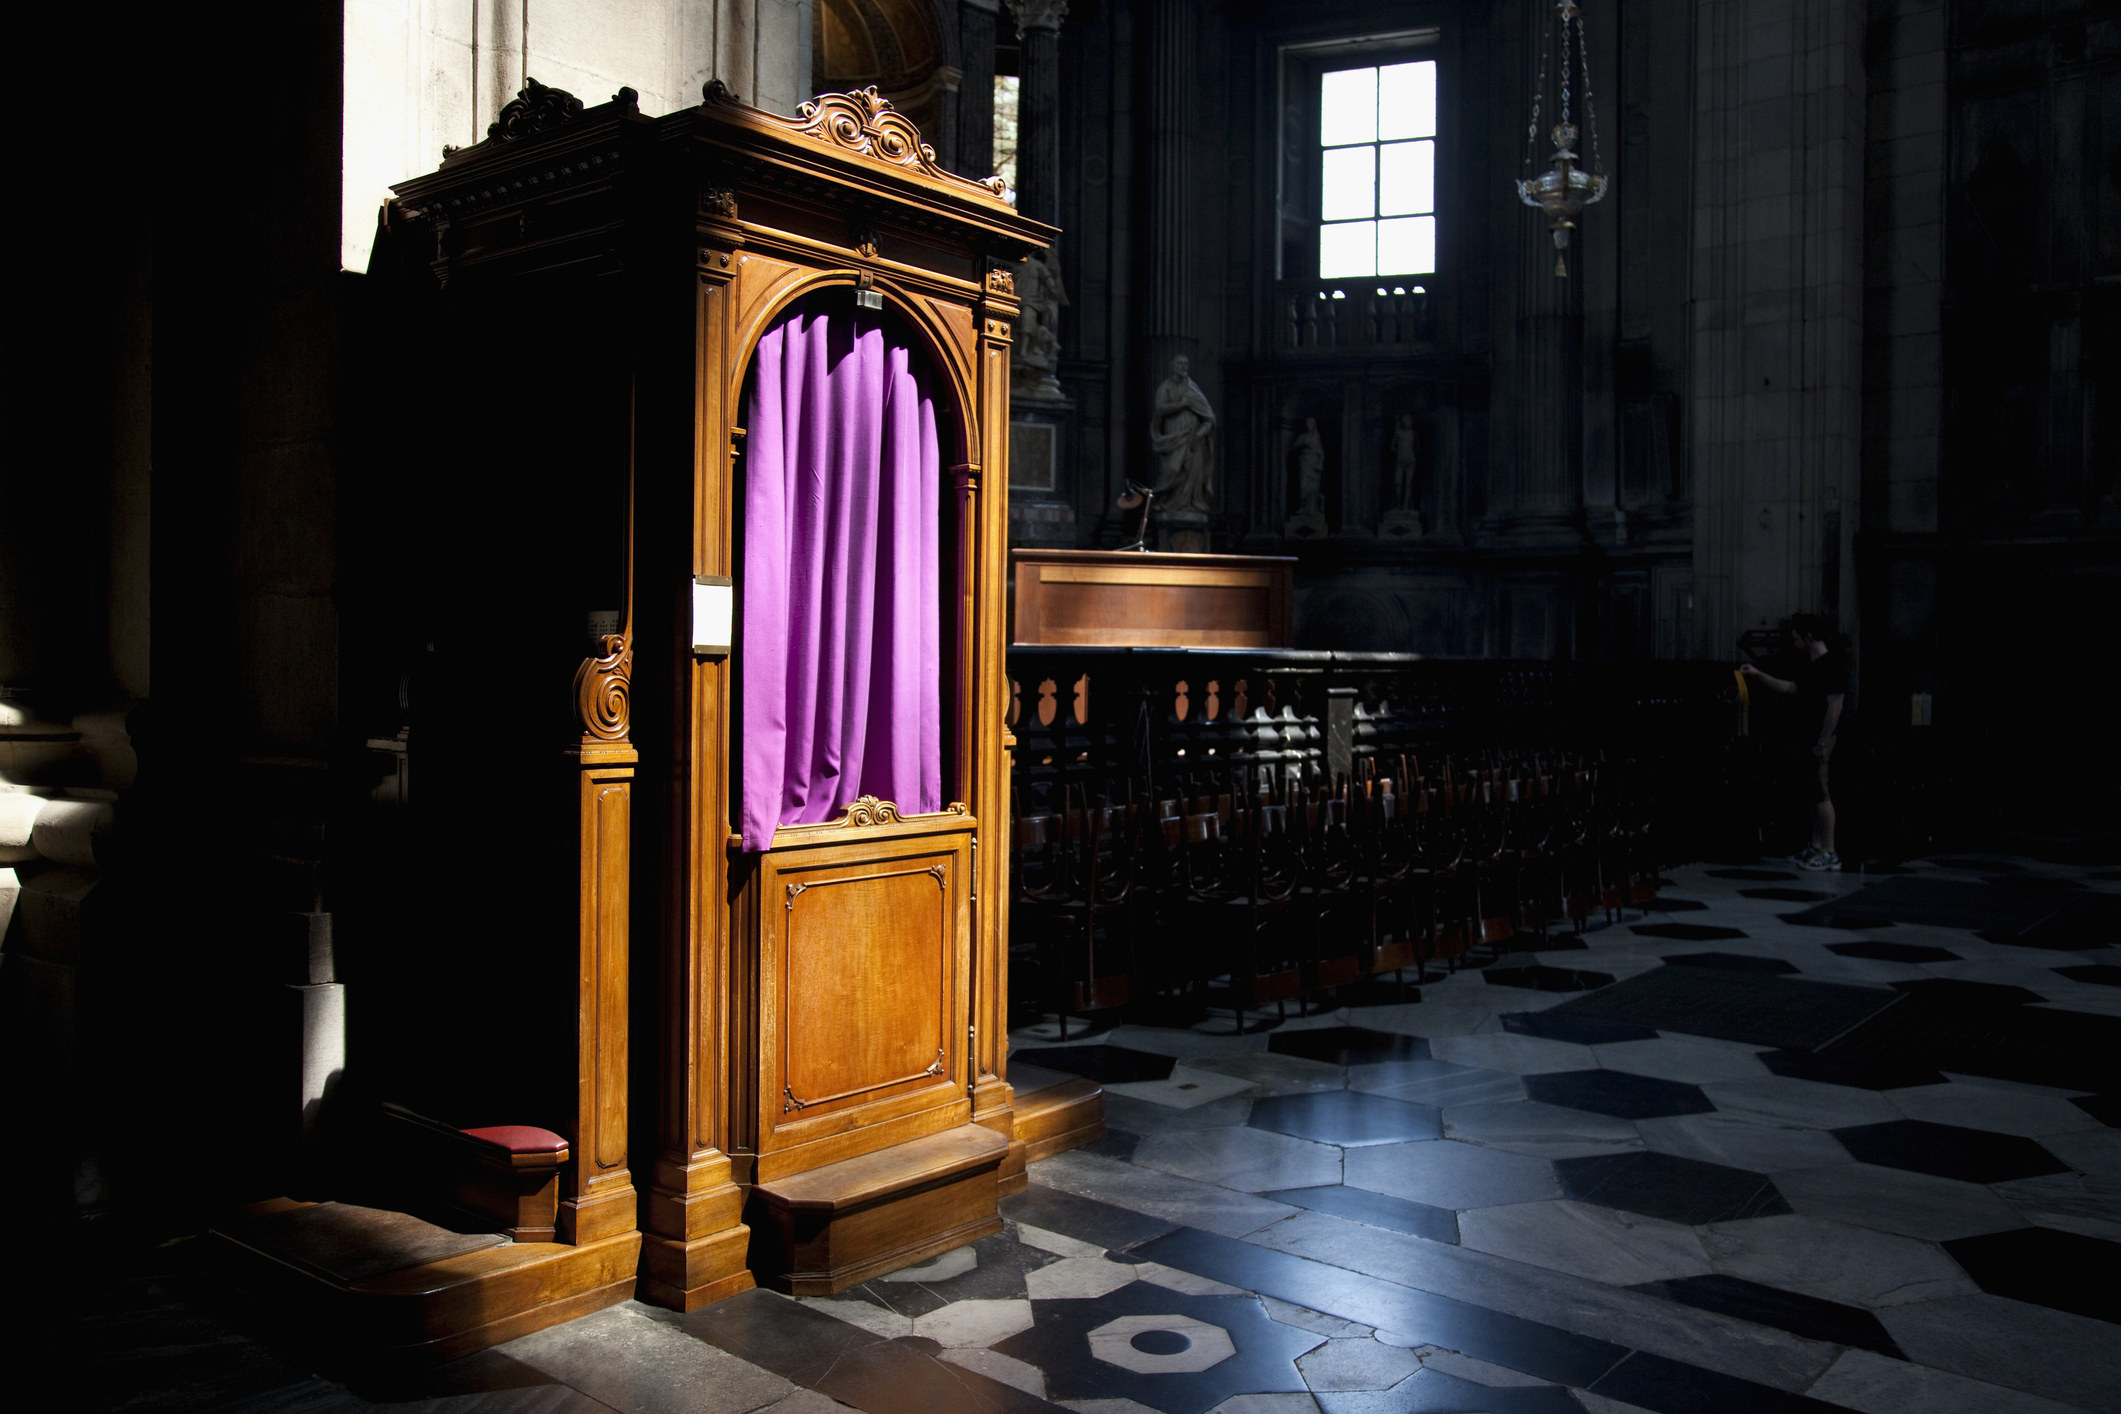 A confessional in a dimly lit church